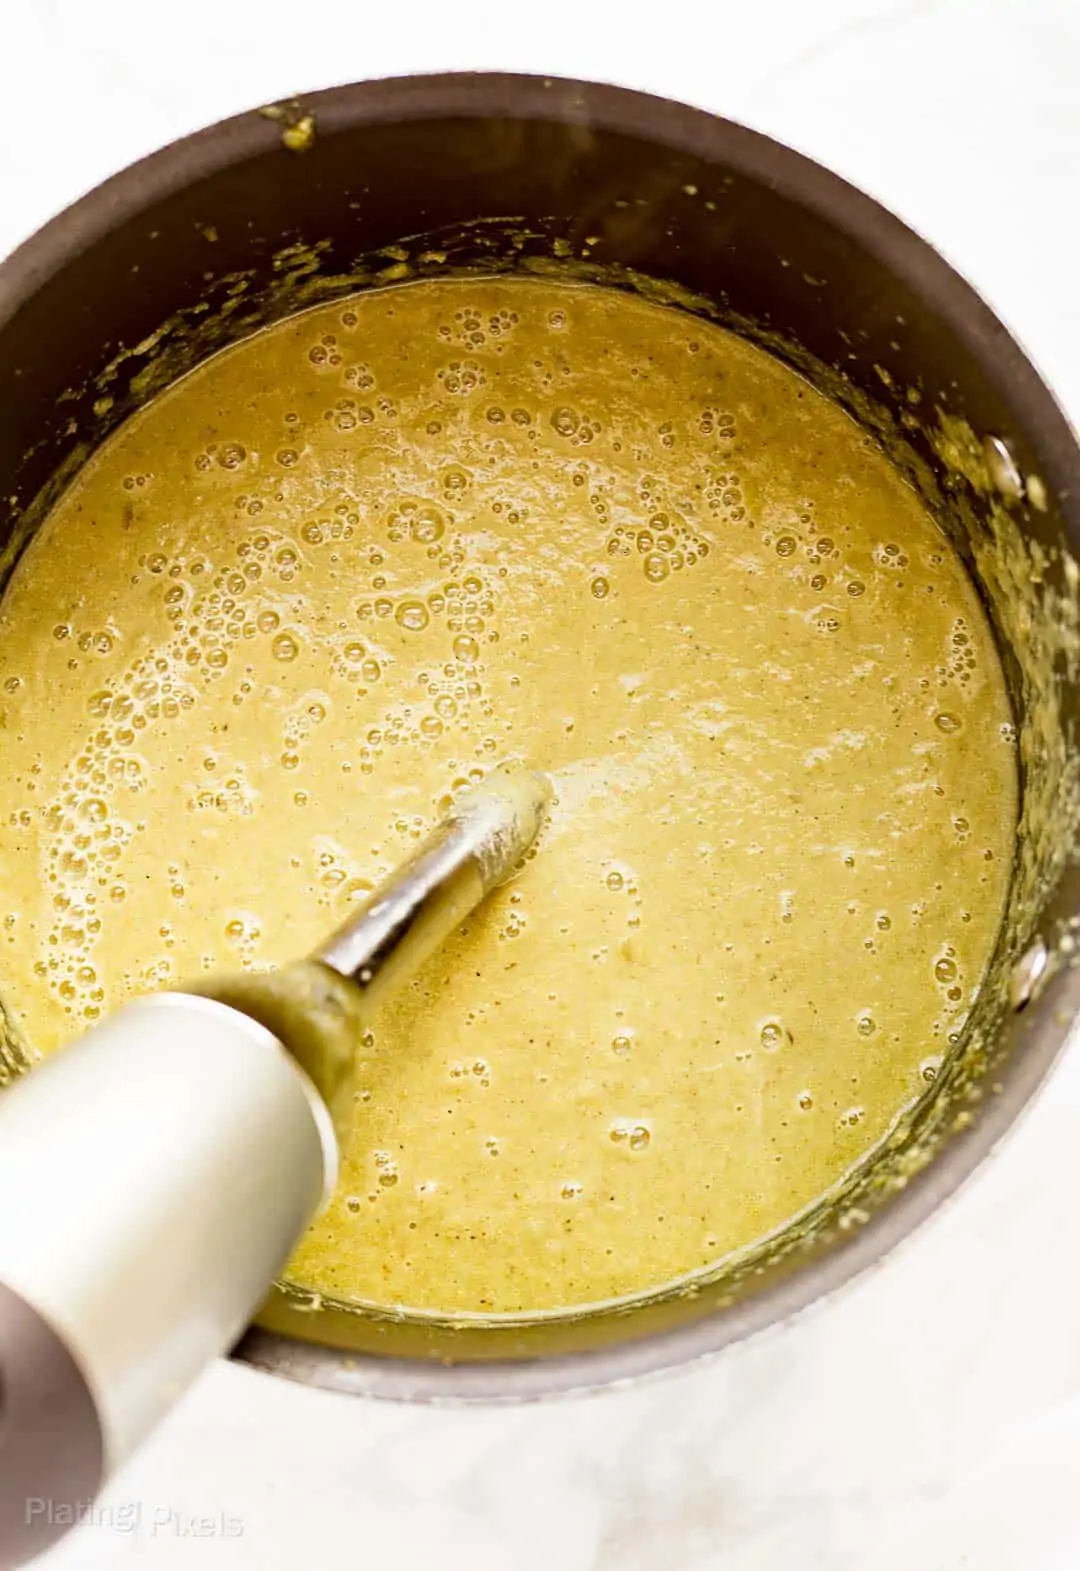 Process shot of blending leek soup with an immersion blender